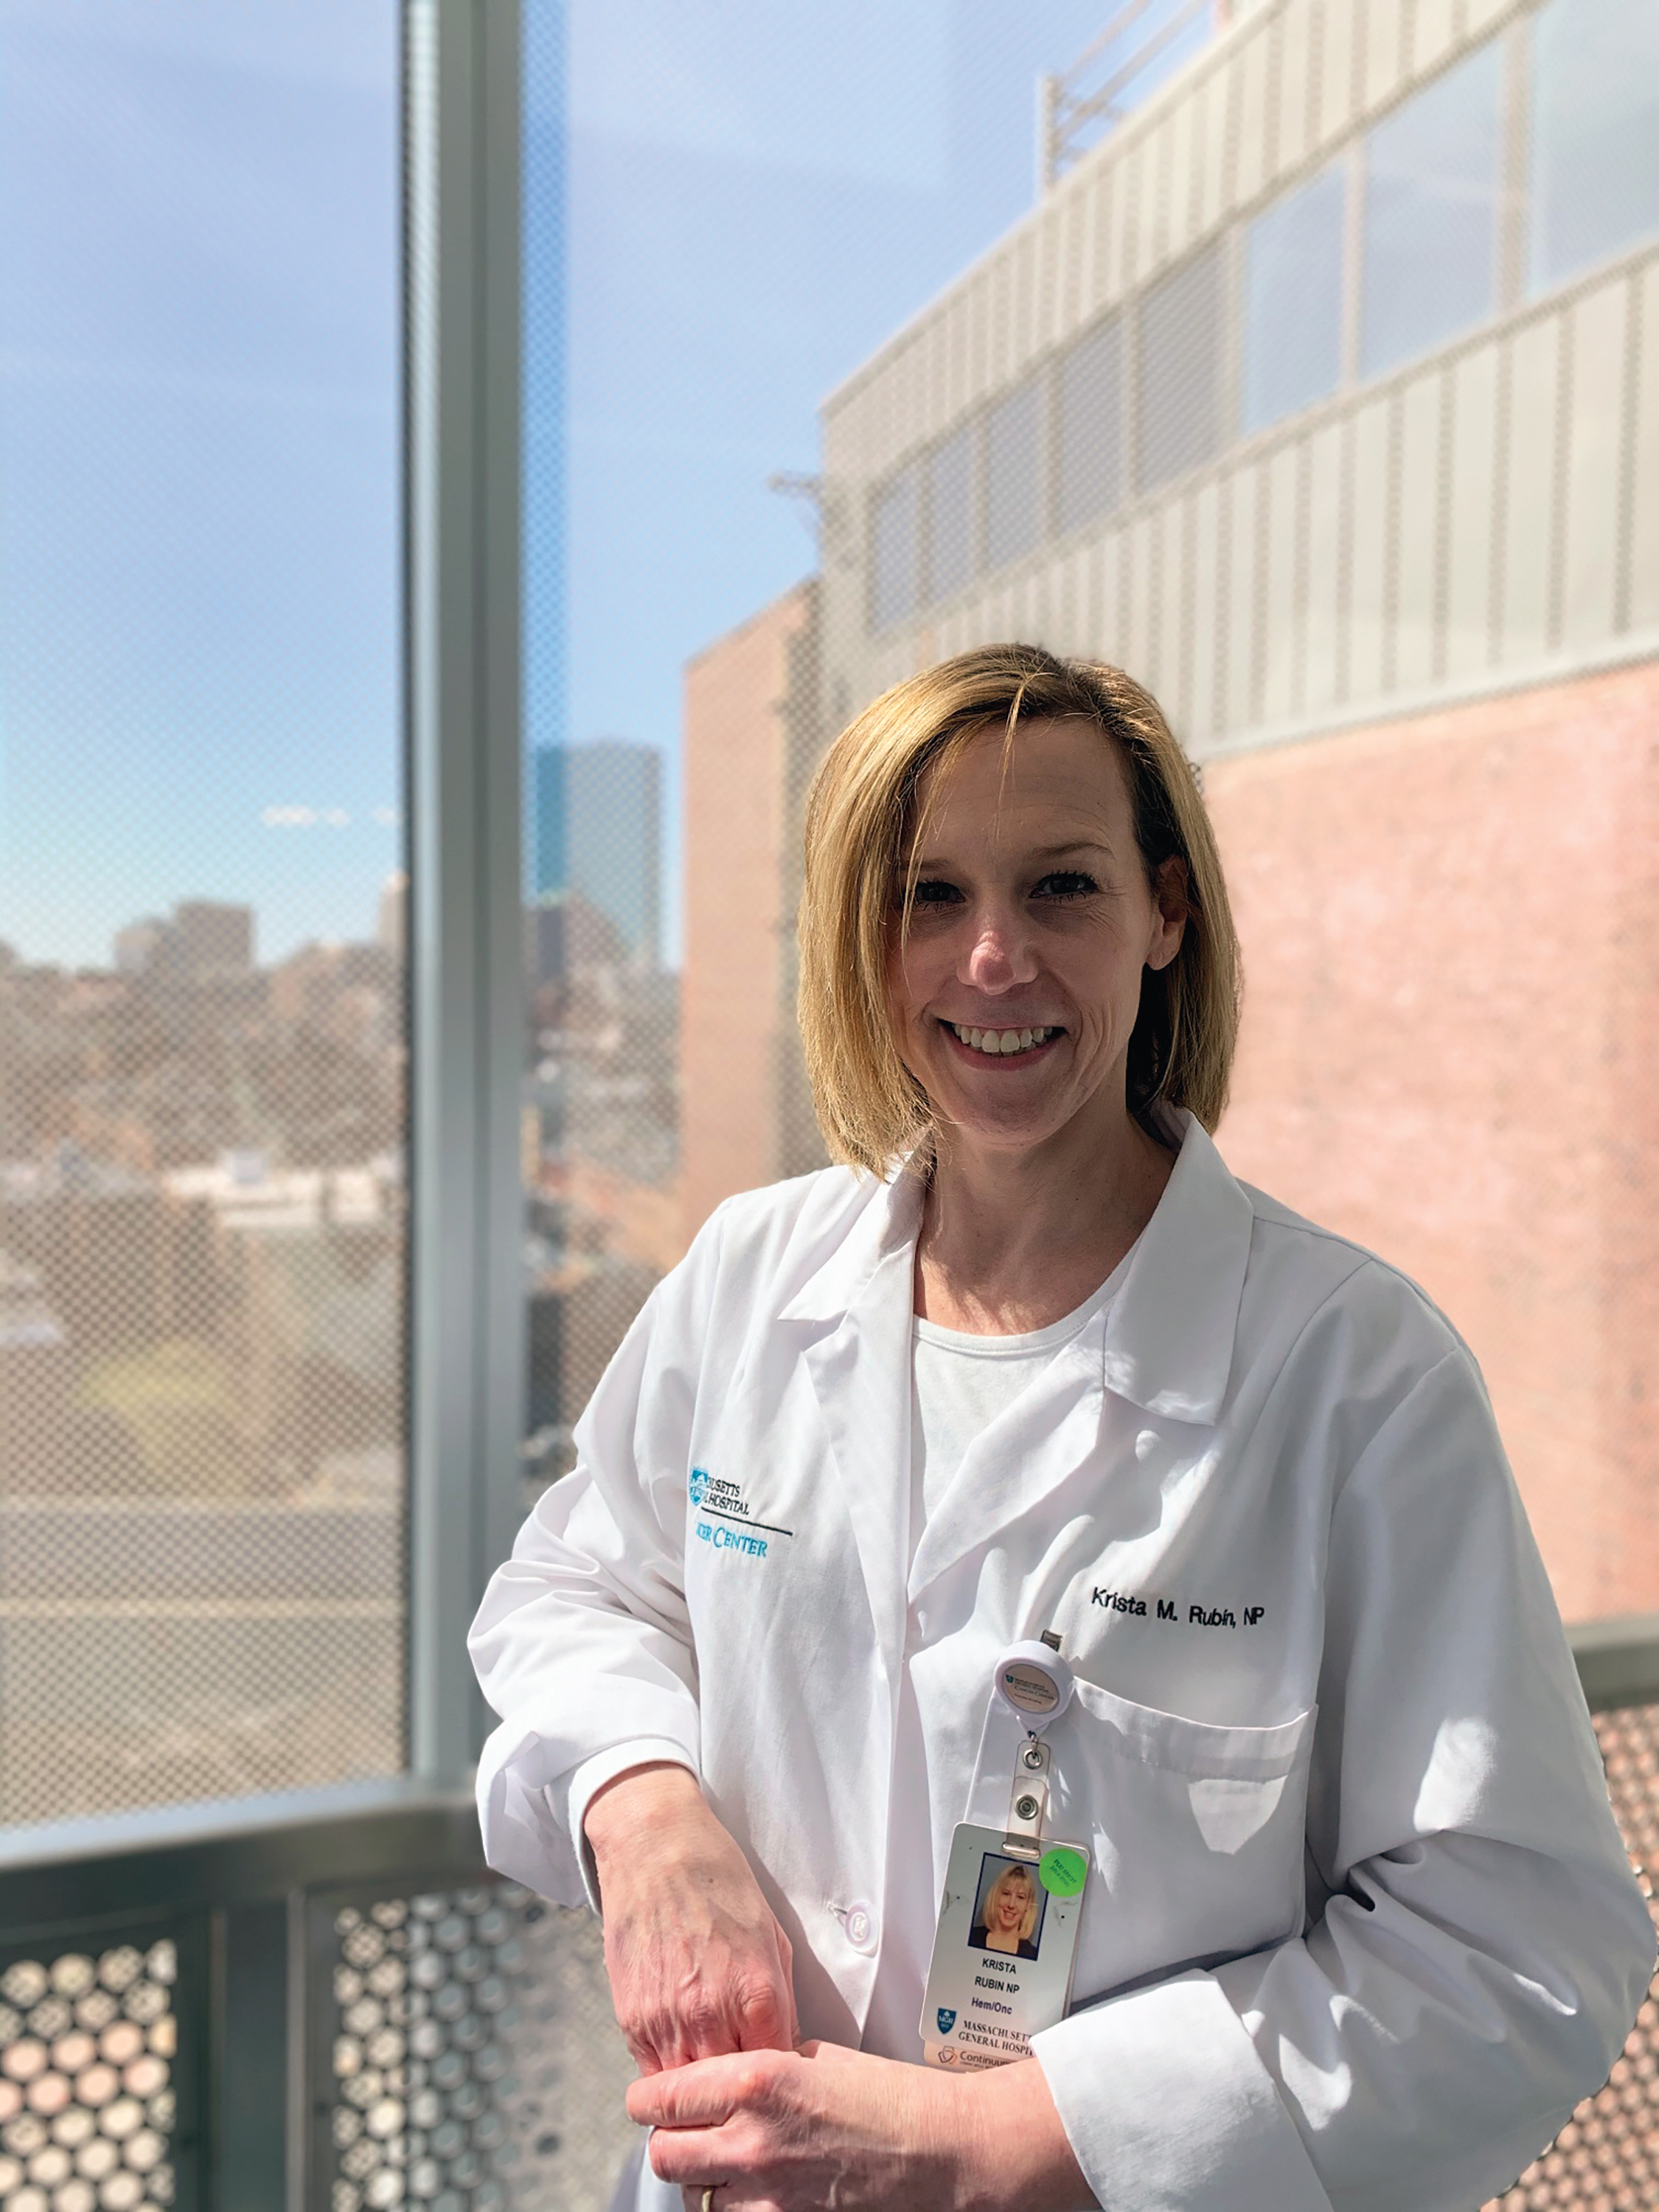 ONS member Krista Rubin, MS, FNP-BC, nurse practitioner at Massachusetts General Hospital’s Center for Melanoma in Boston and member of the Boston ONS Chapter